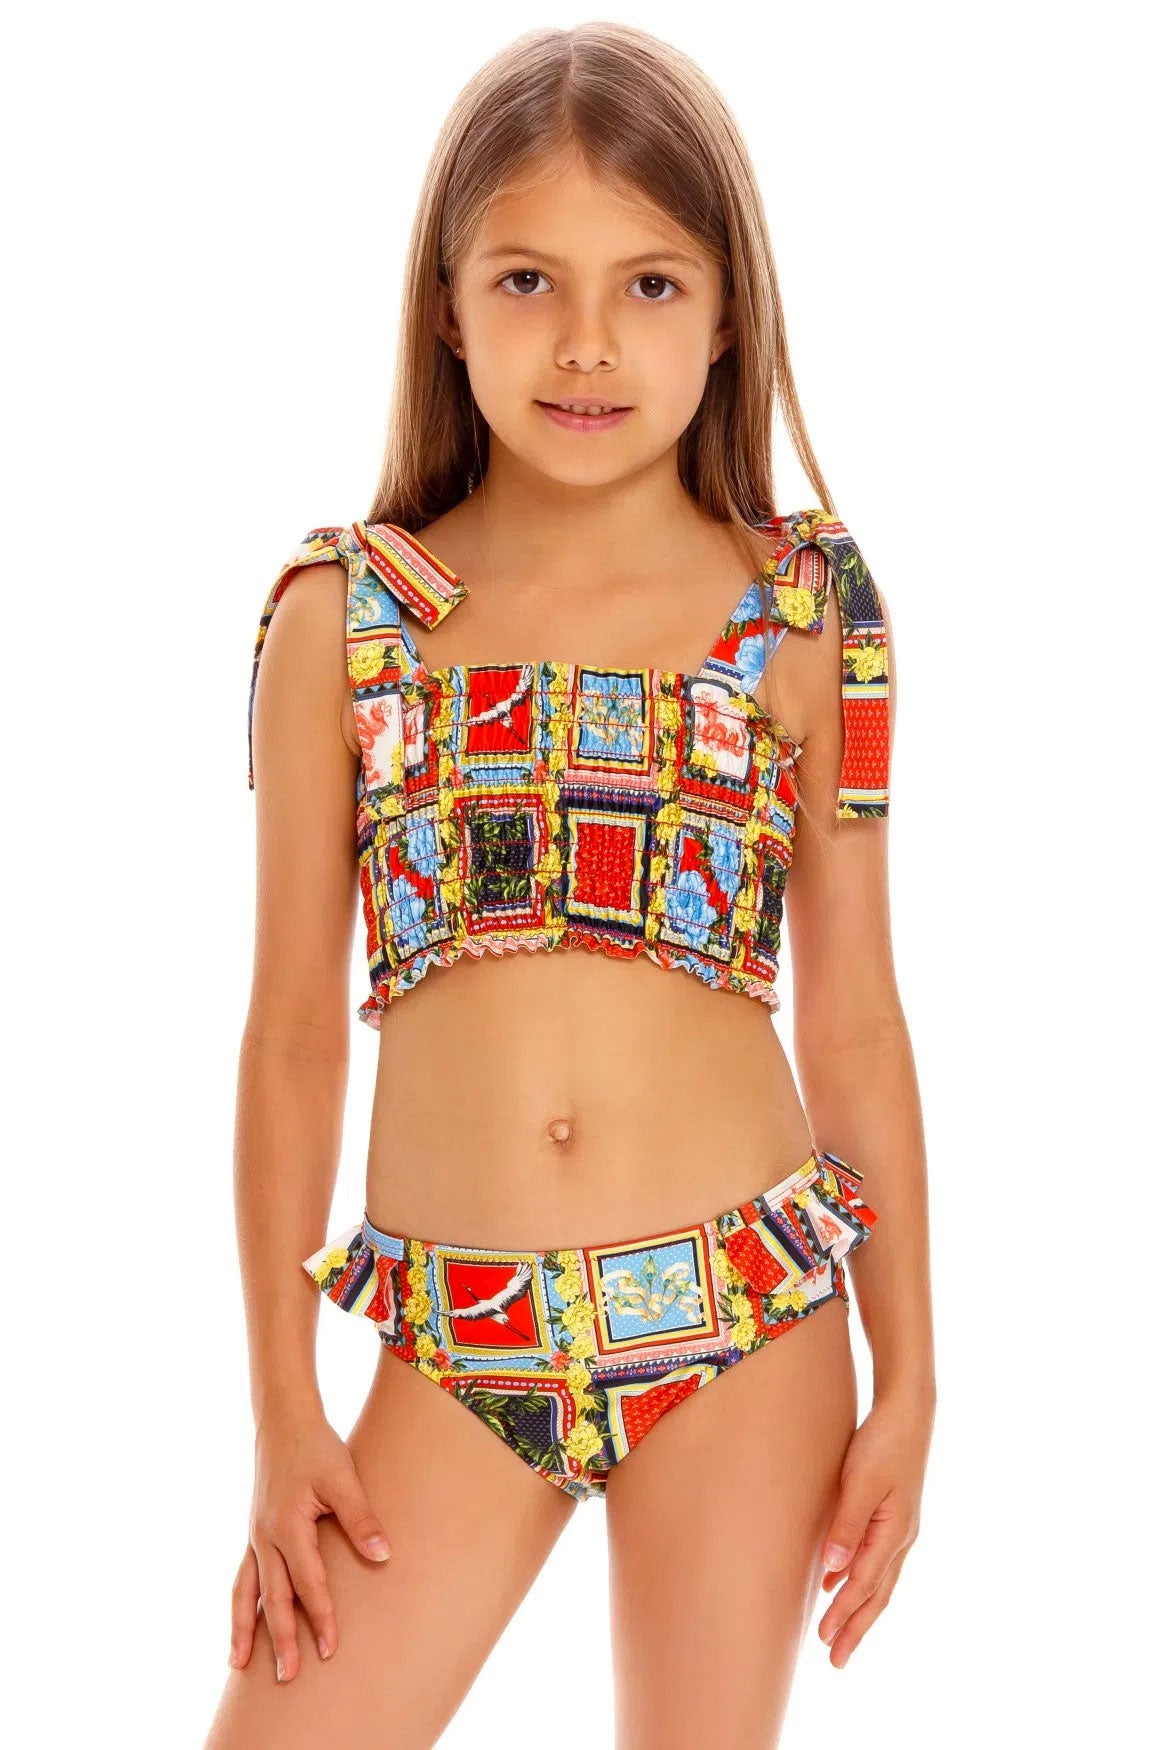 Scarf motif kids two piece swimsuit